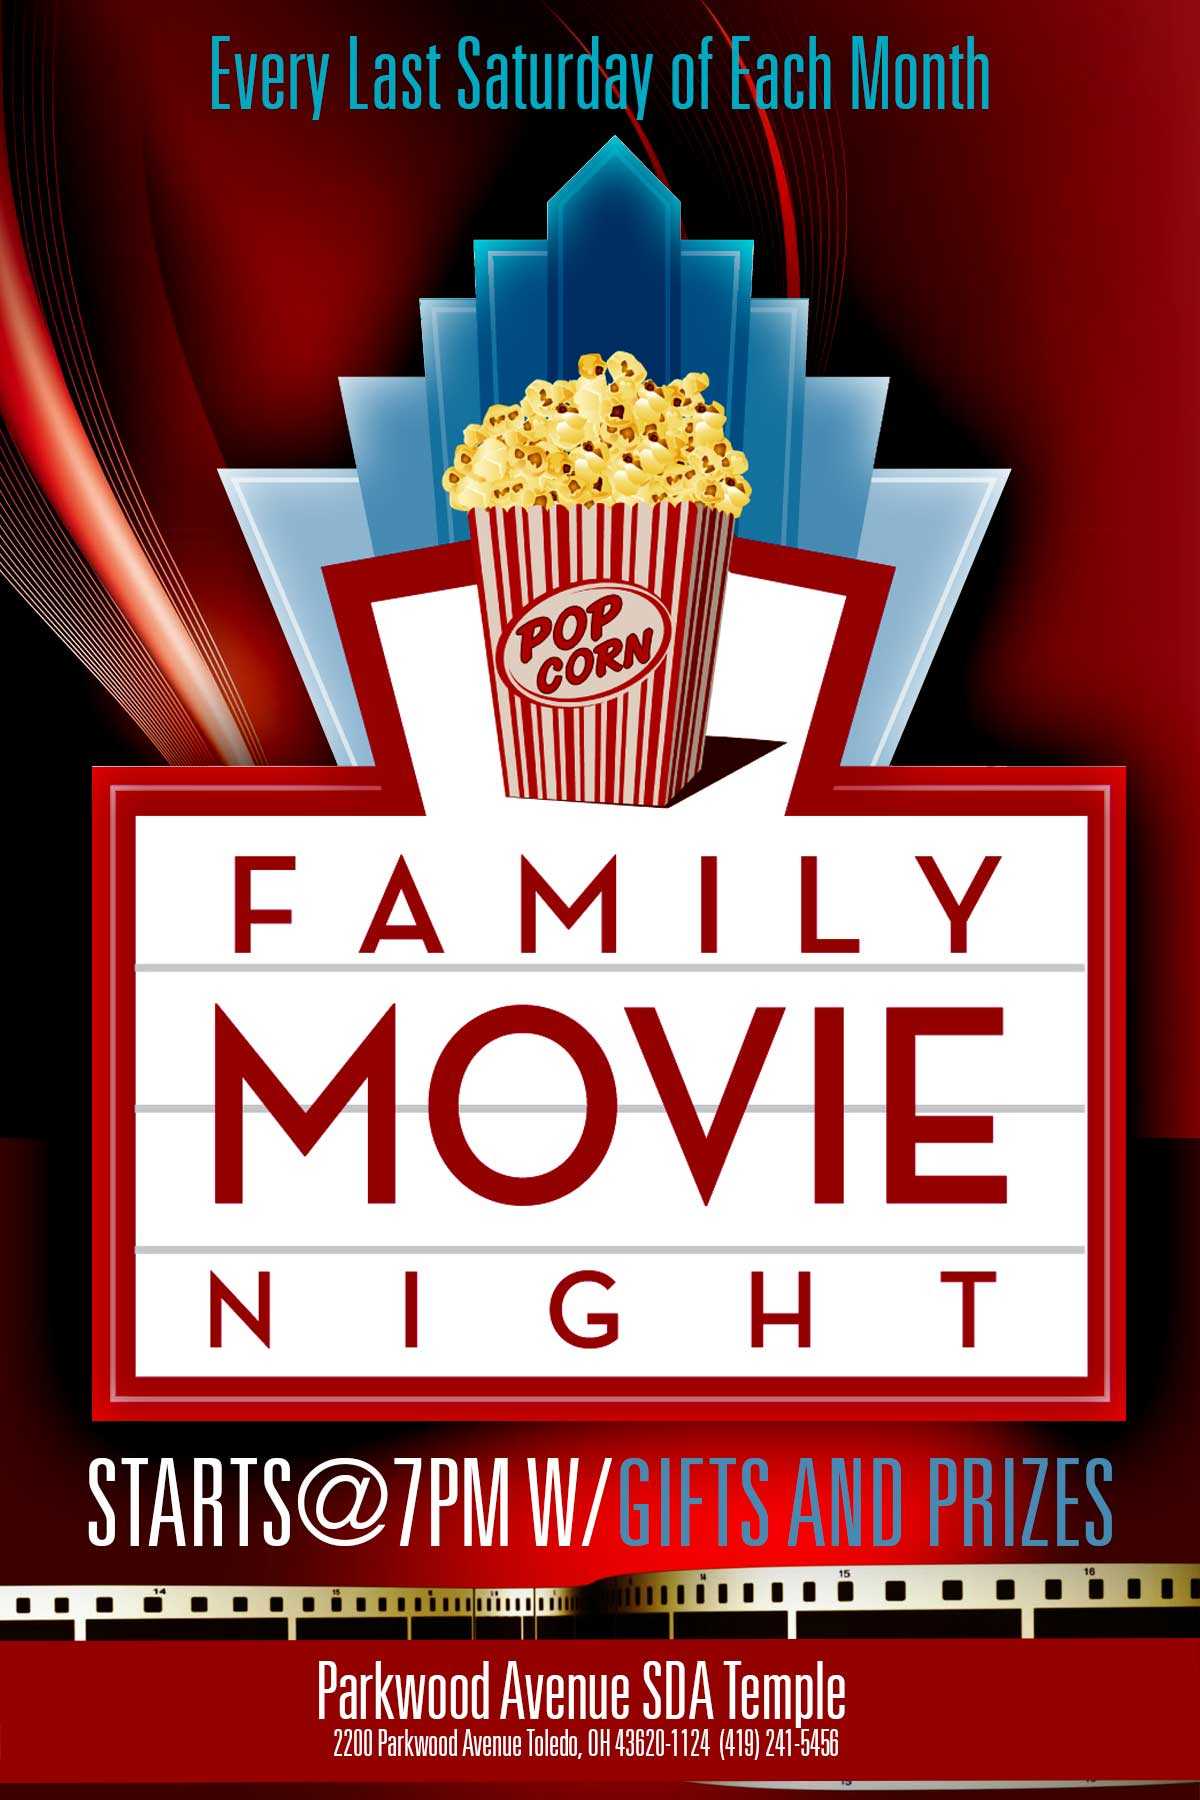 033 Movie Flyer Template Free Night Unusual Ideas Family Intended For Family Night Flyer Template